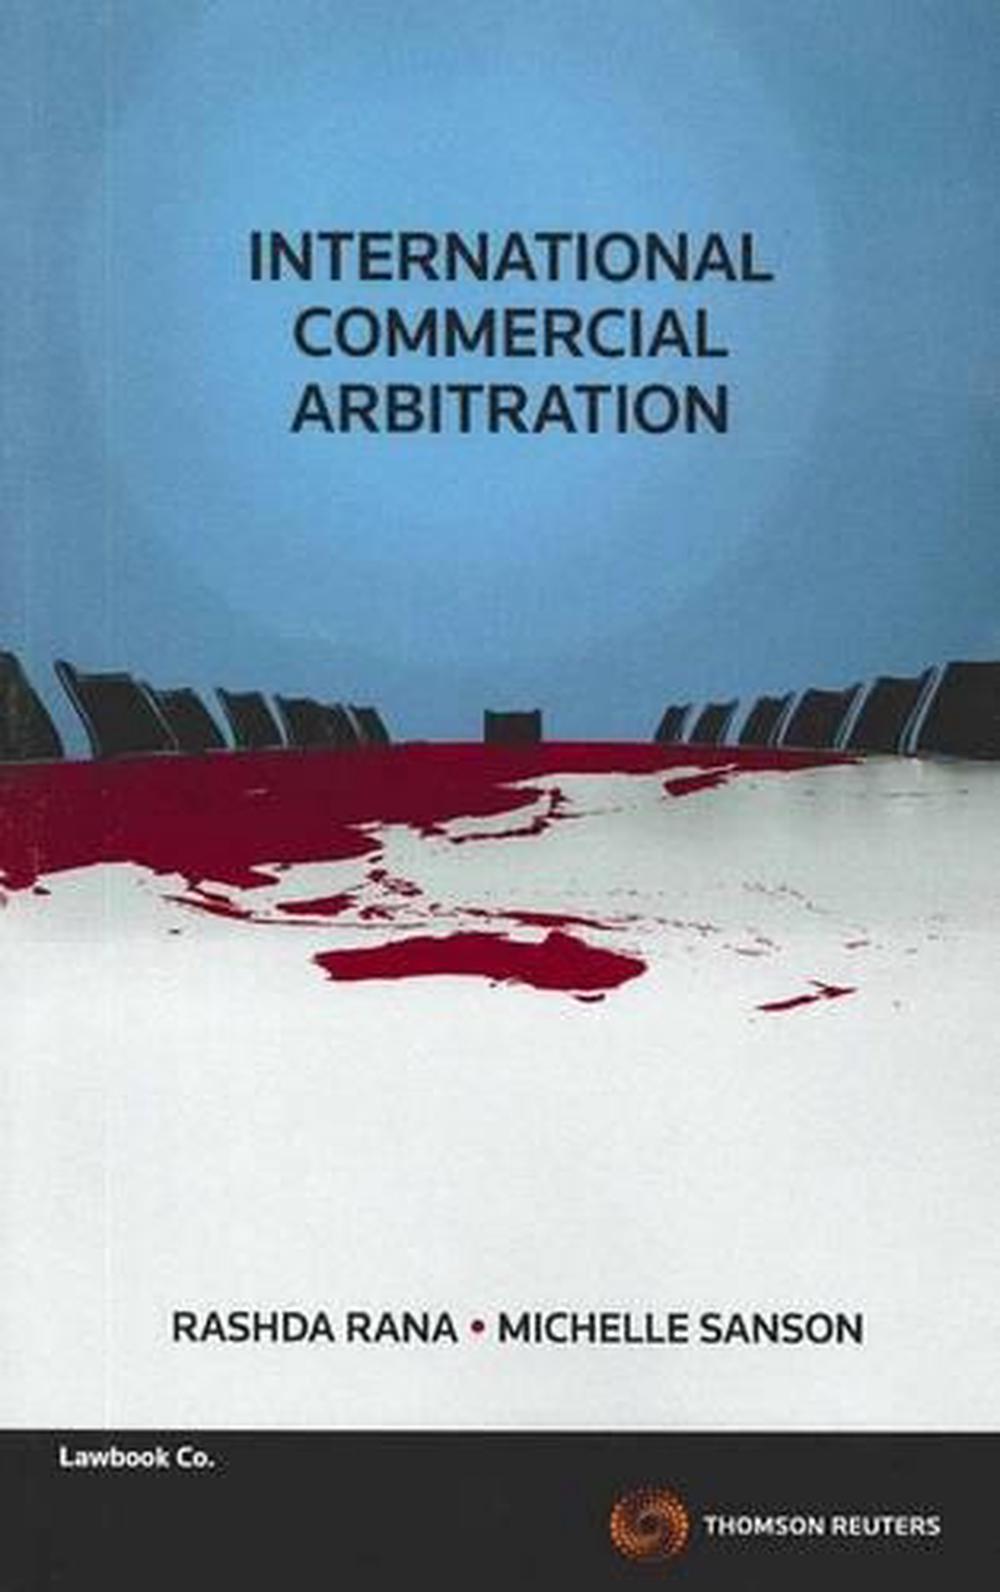 international commercial arbitration dissertation topics